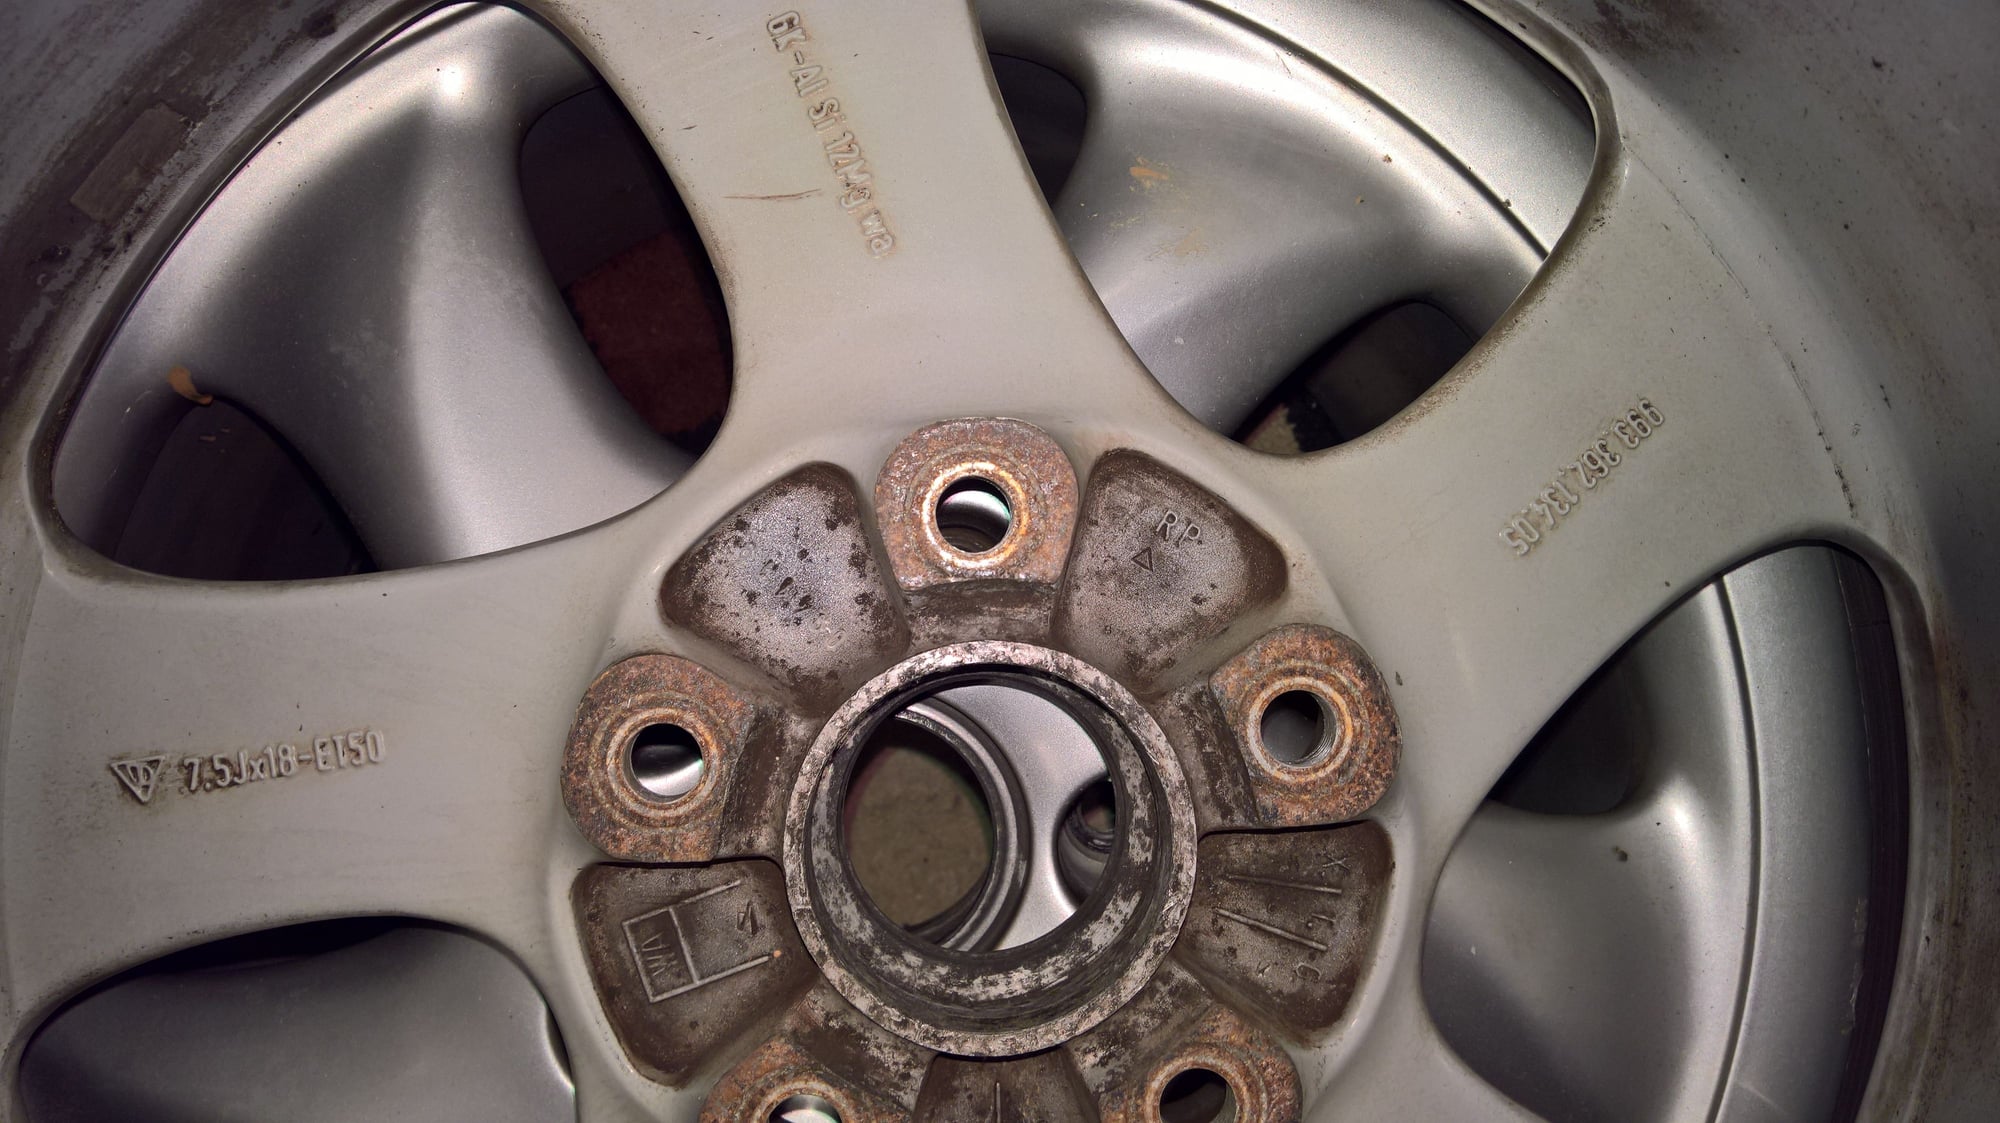 Wheels and Tires/Axles - 993/996 Hollowspoke Wheels and Bridgestone Potenza S04 tires. - Used - 1995 to 2005 Porsche 911 - Redmond, WA 98052, United States